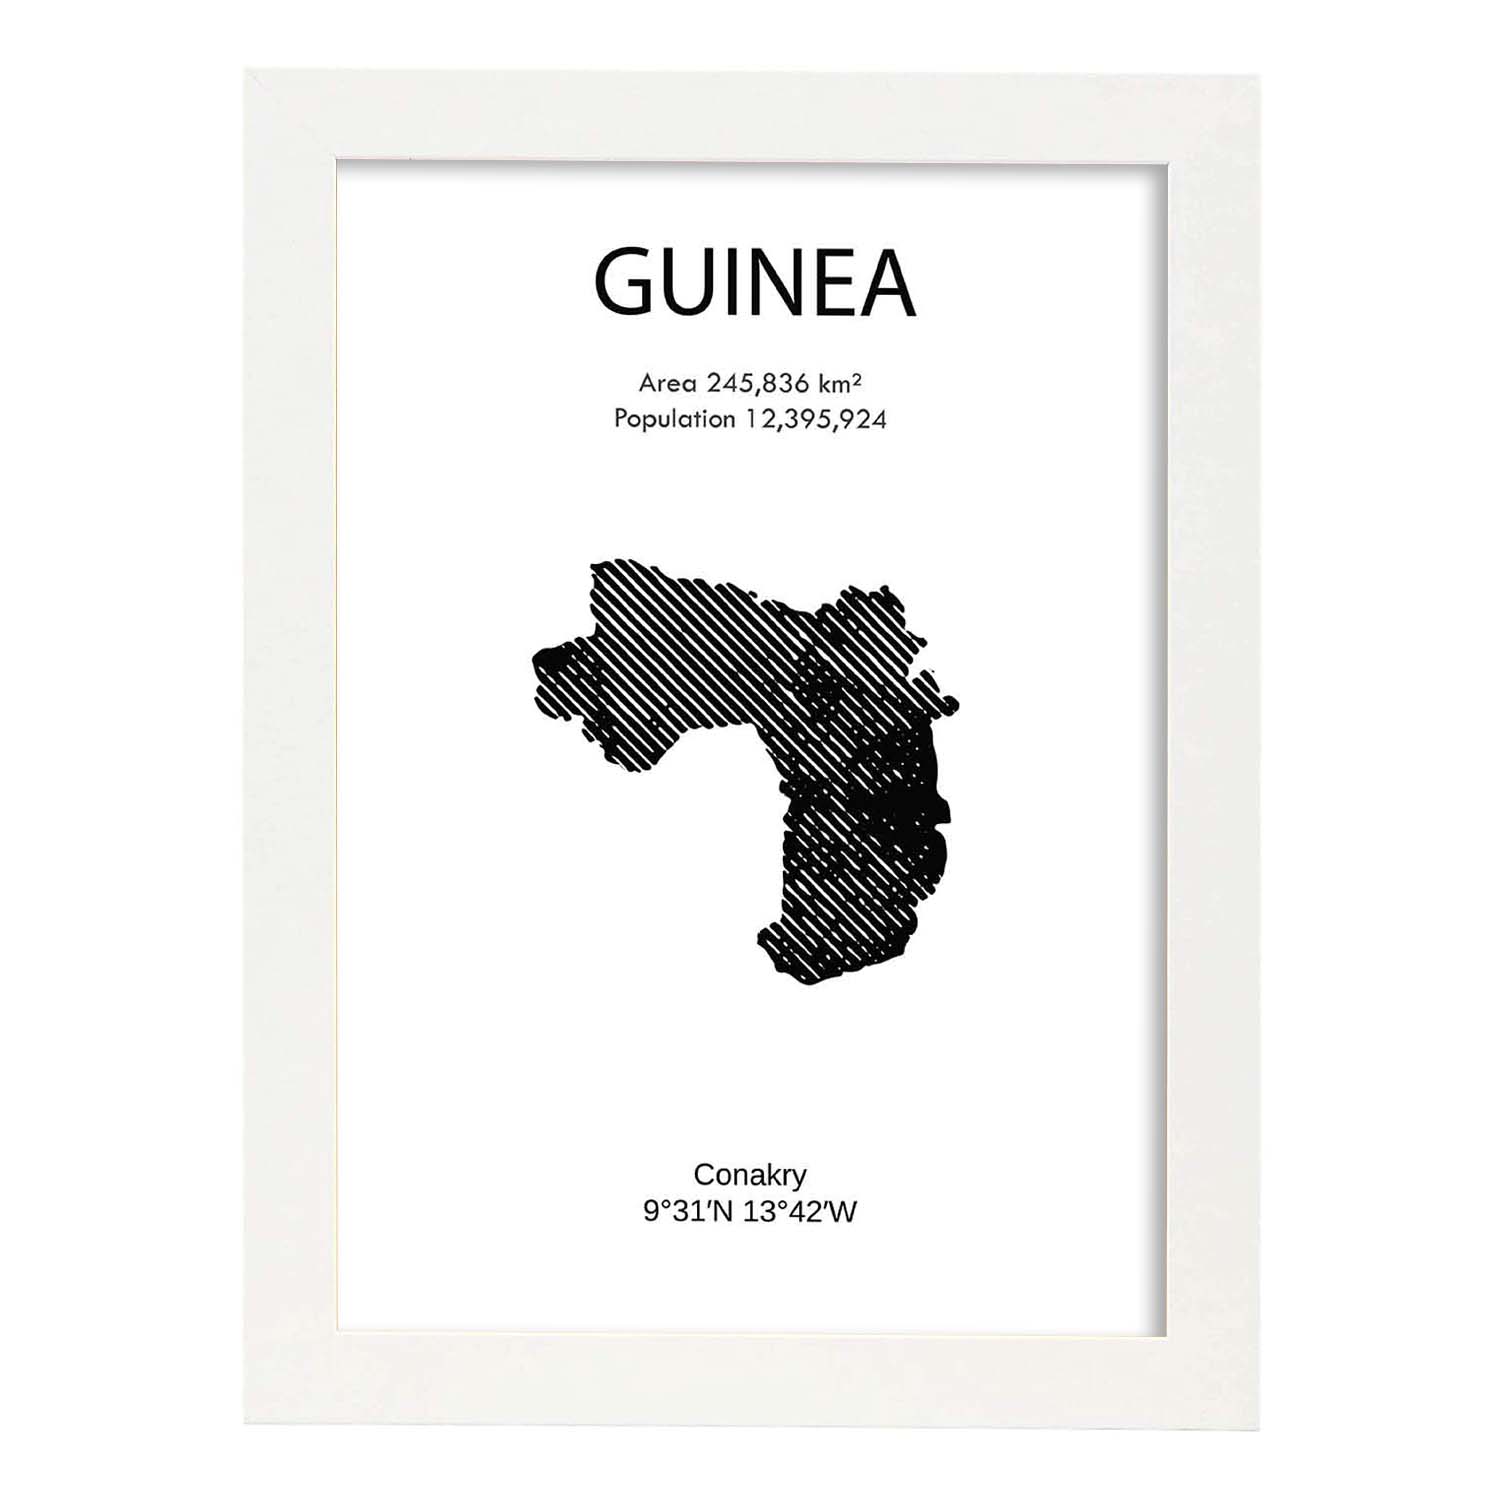 Poster de Guinea. Láminas de paises y continentes del mundo.-Artwork-Nacnic-A4-Marco Blanco-Nacnic Estudio SL